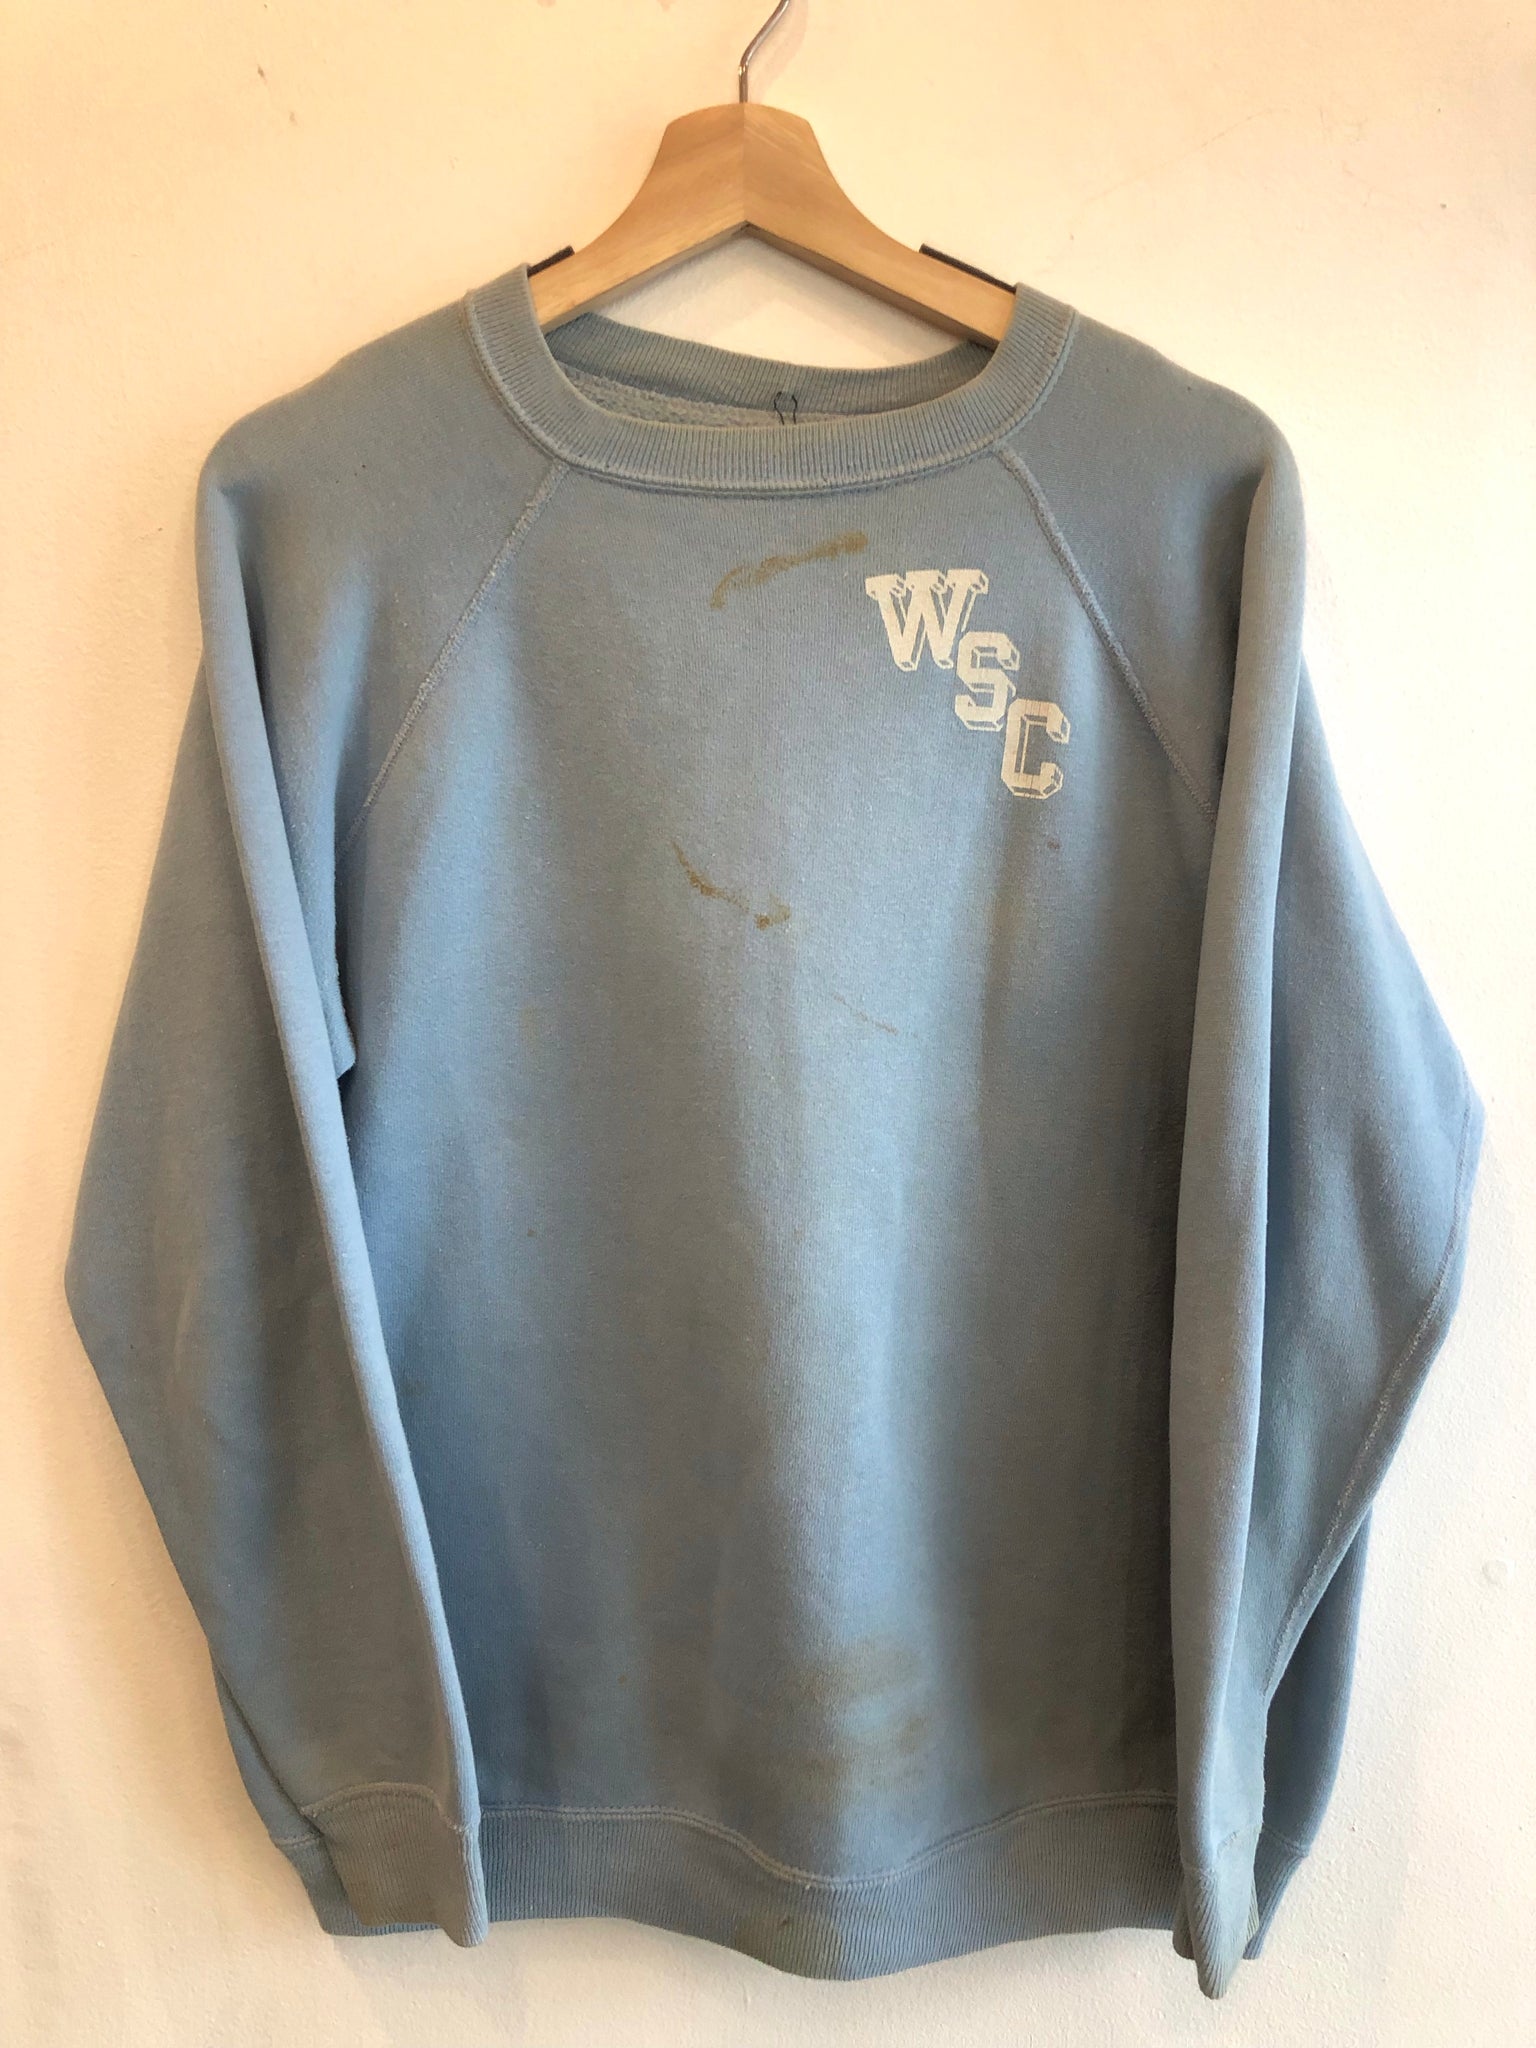 Vintage 1960’s Washington State College Sweatshirt